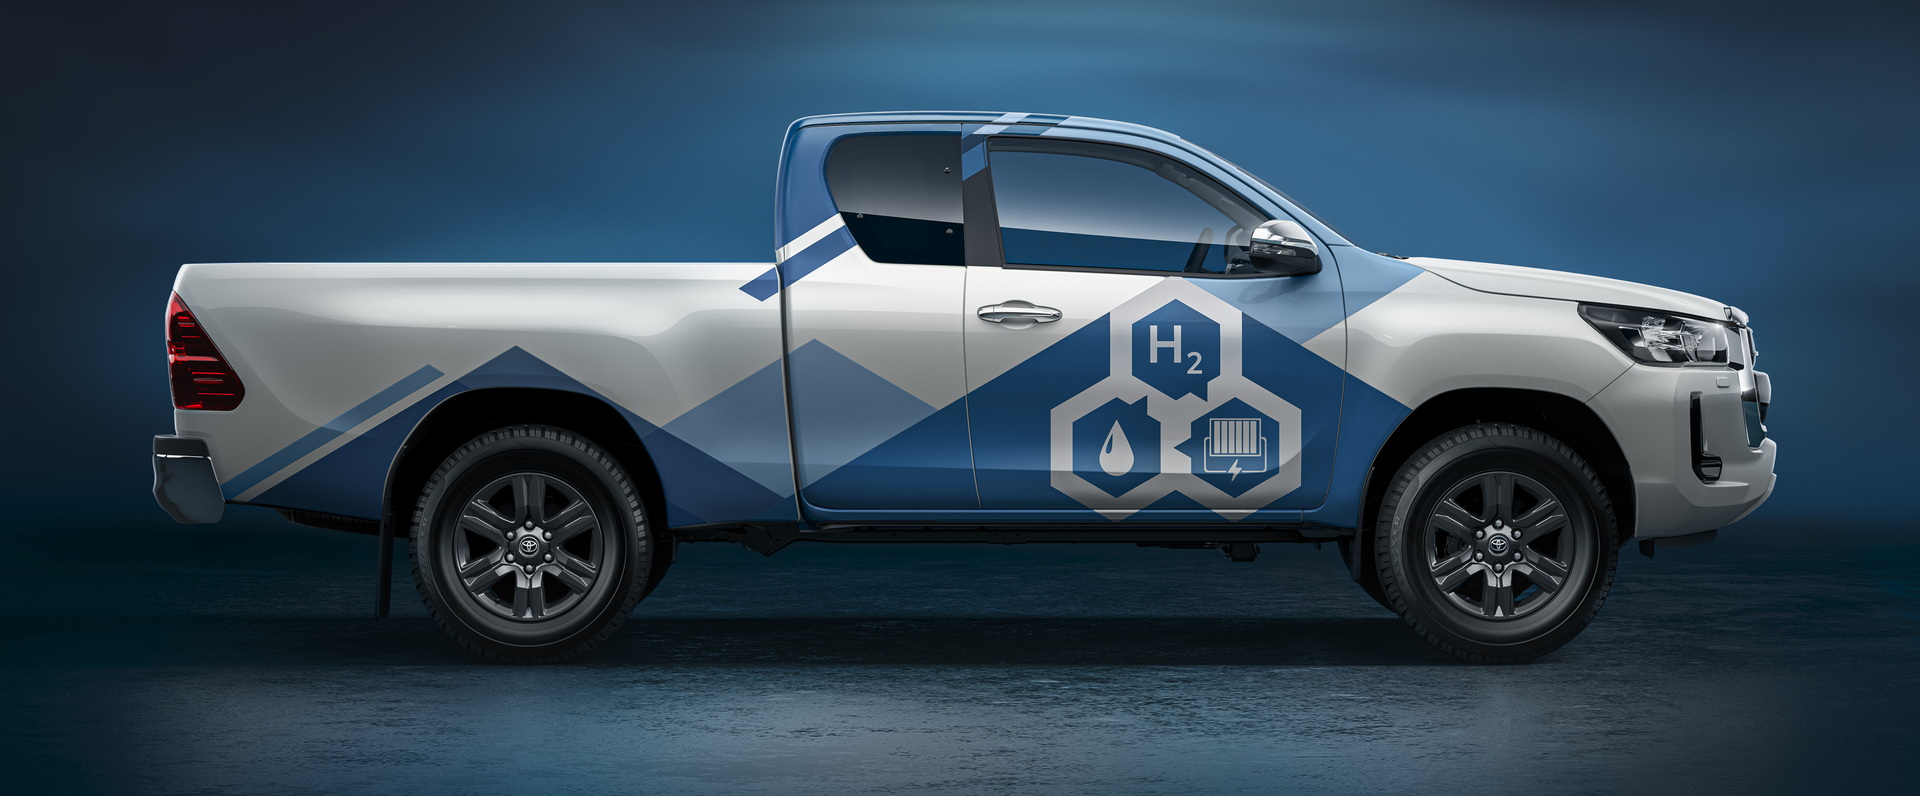 Prototipo Toyota Hilux H2 Hydrogen